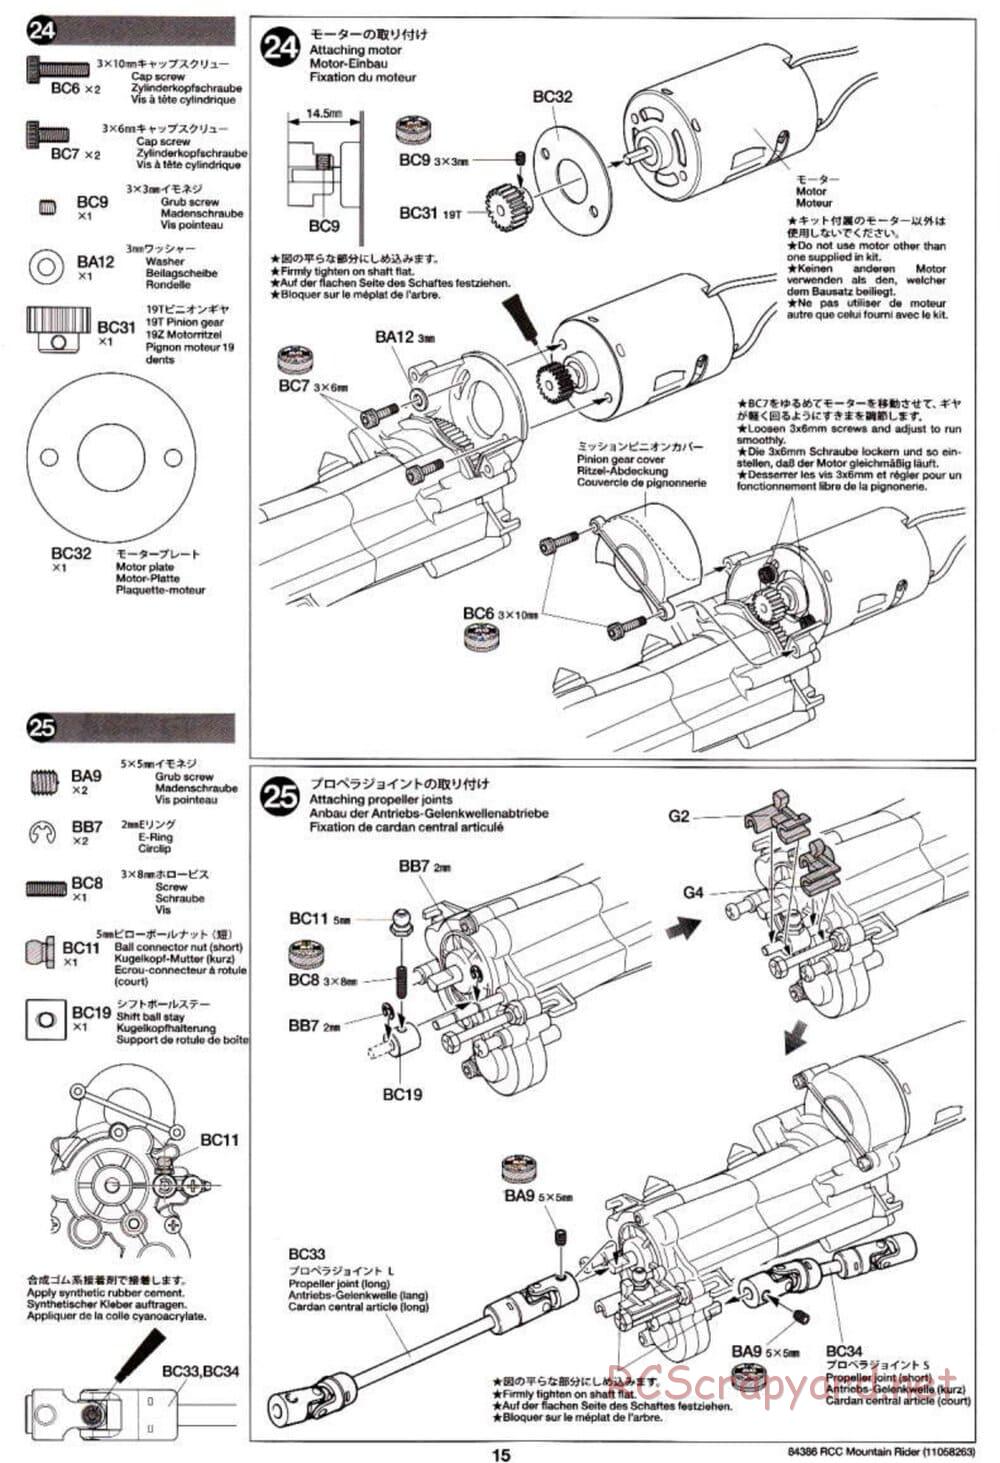 Tamiya - Toyota 4x4 Pick-Up Mountain Rider Chassis - Manual - Page 15